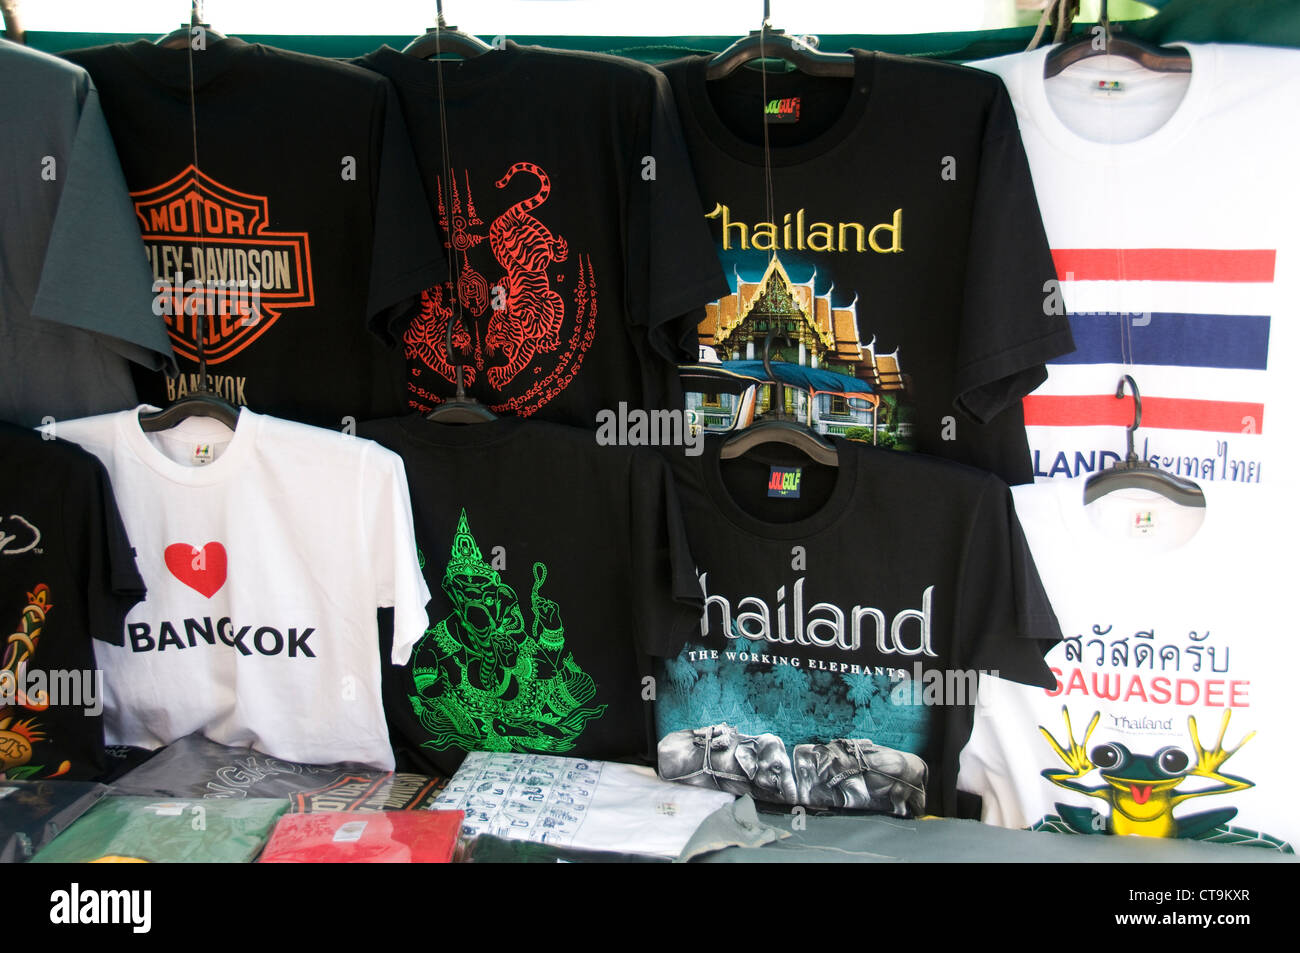 Bangkok t shirts hi-res stock photography and images - Alamy